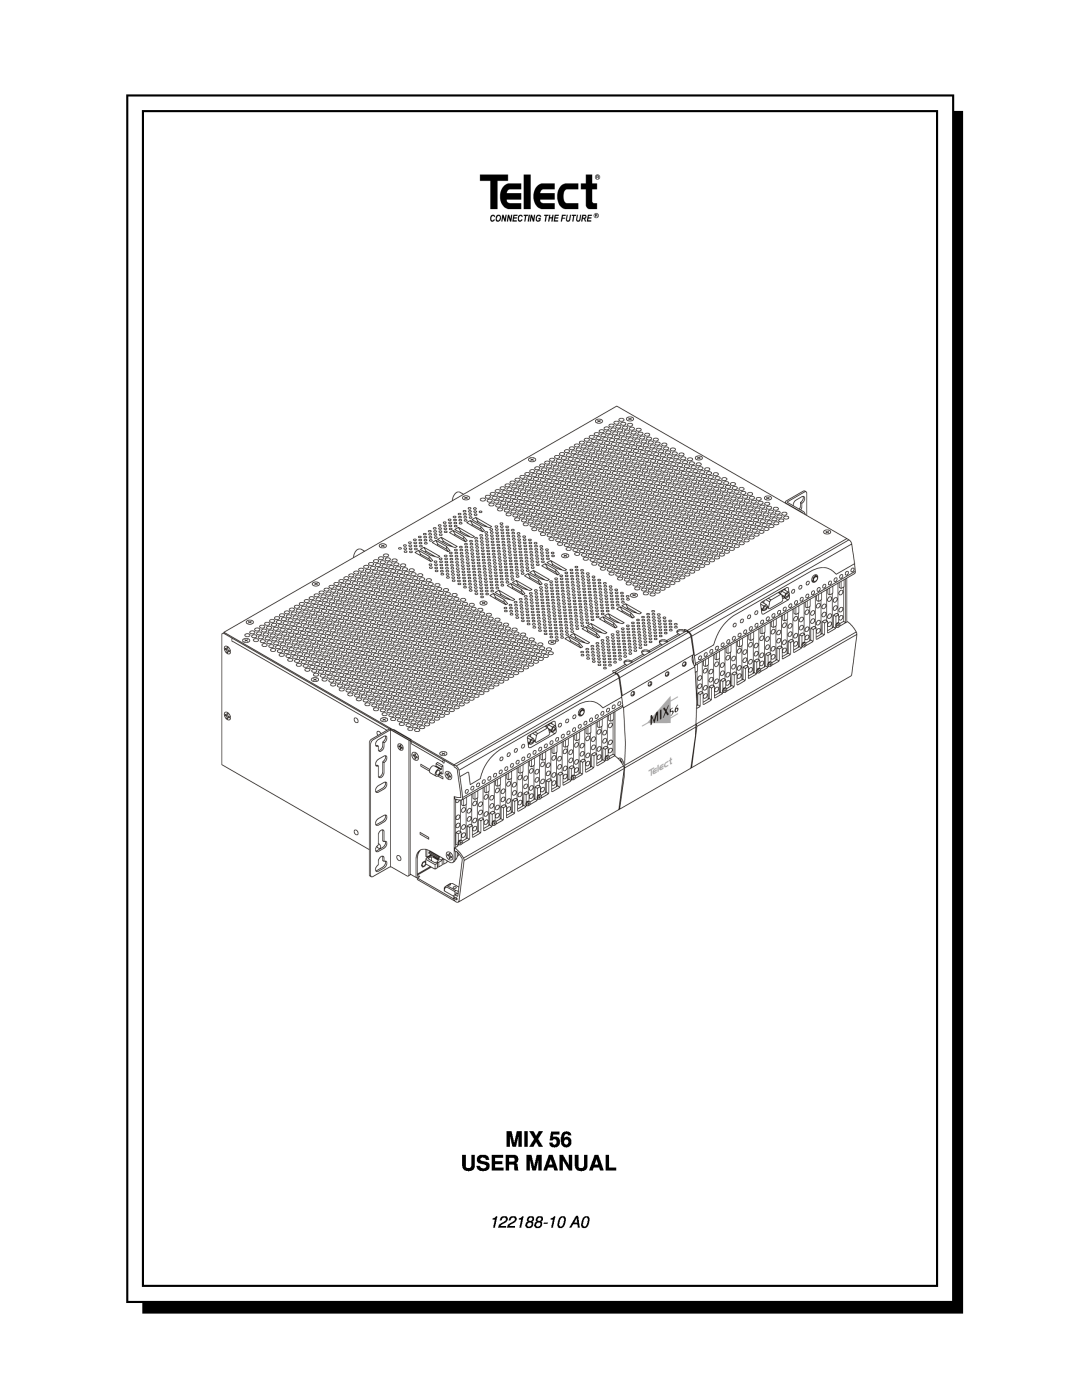 Telect MIX 56 user manual User Manual, 122188-10 A0 